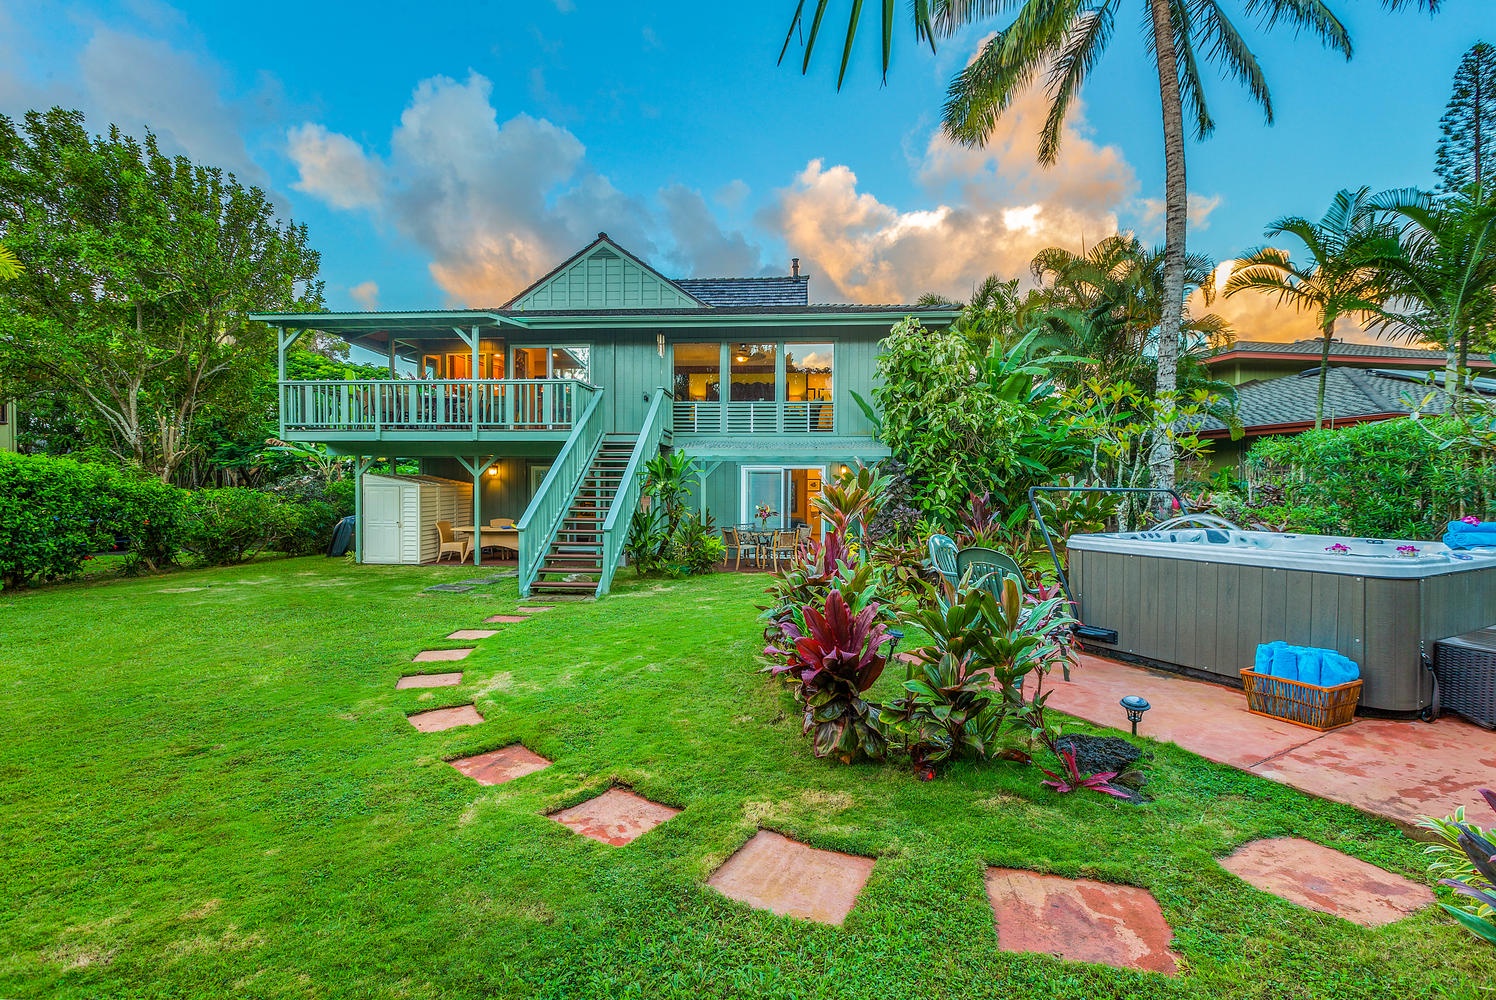 Princeville Vacation Rentals, Hale Anu Keanu - Twilight in the garden